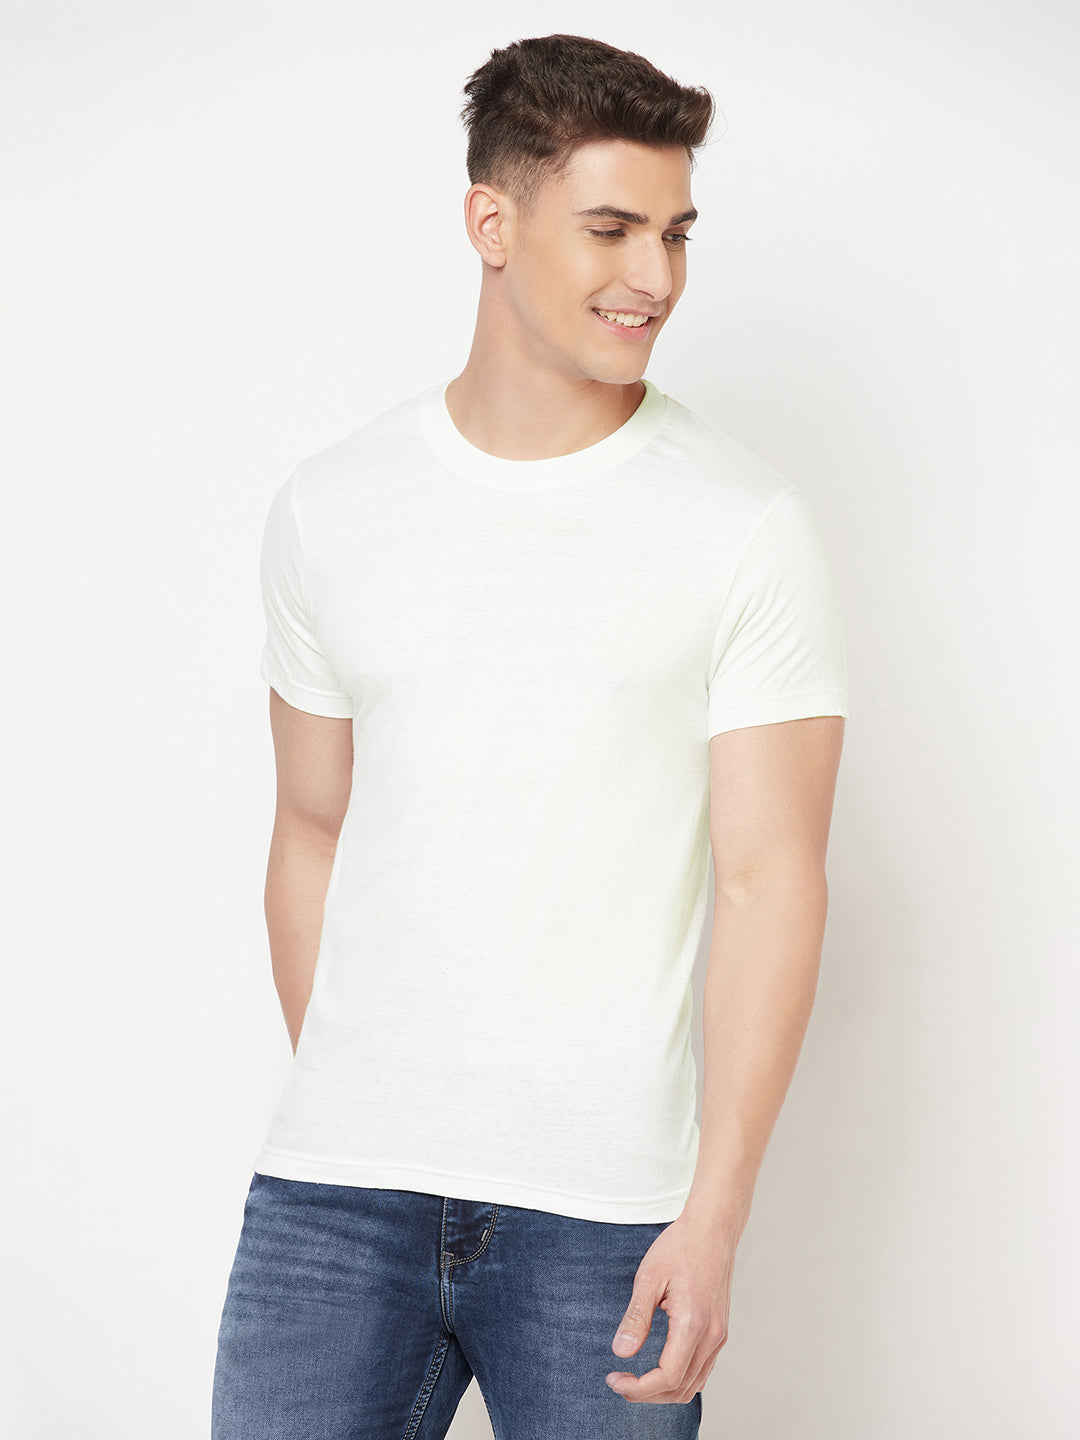 Premium Cotton Tshirts  (Pack of 2- White,Blue)